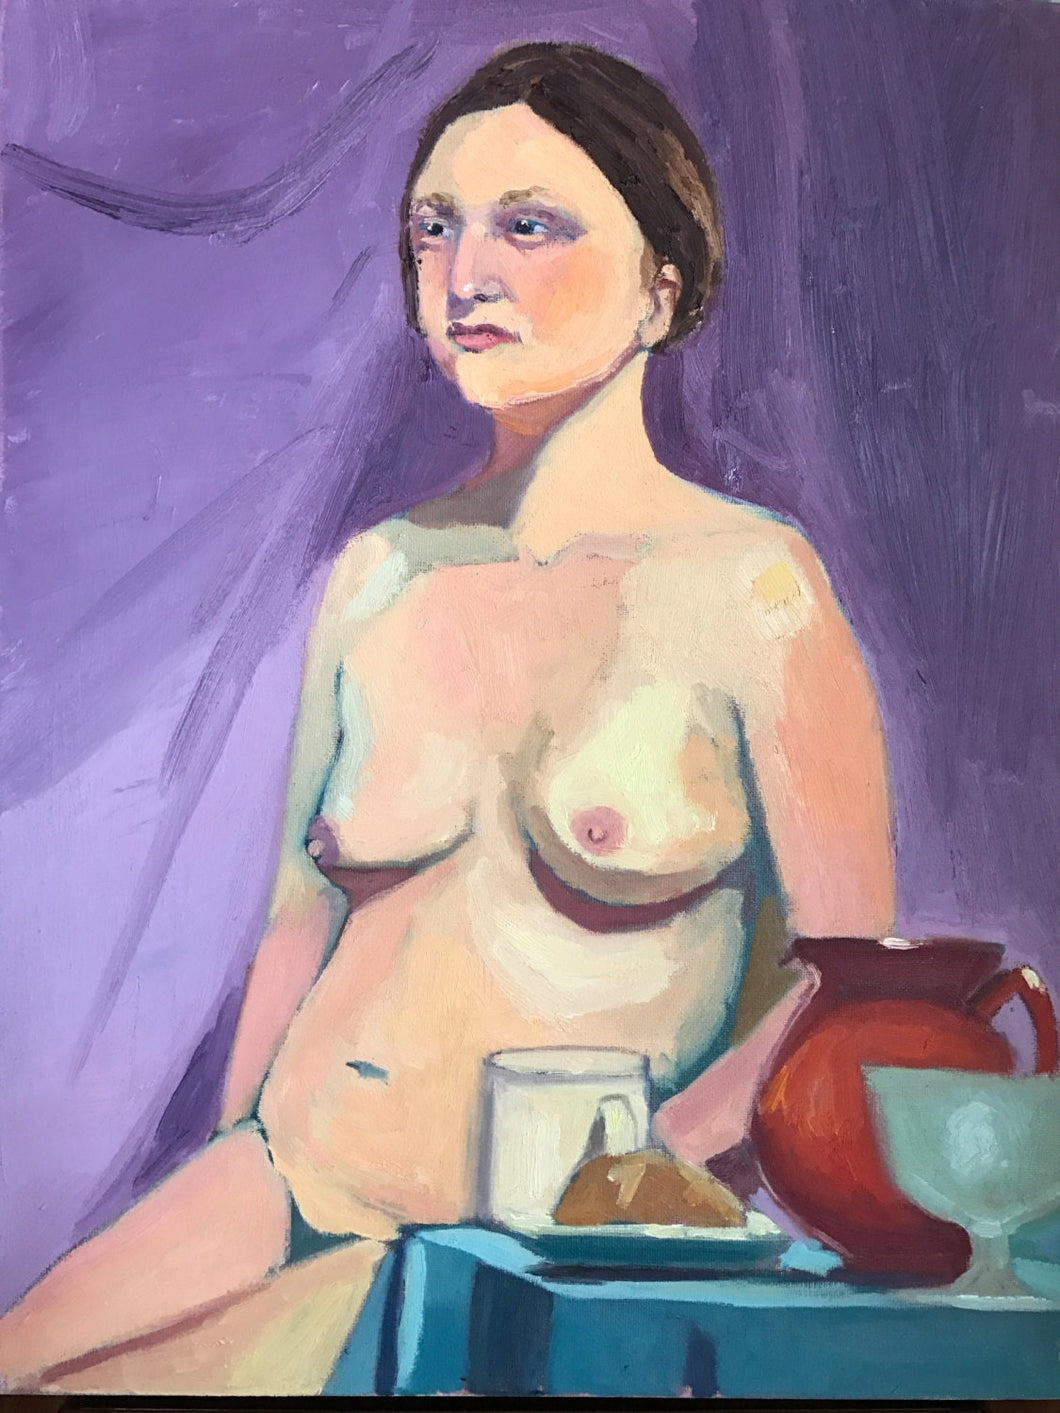 Female Figure painting, Figurative Original Oil on Canvas female nude, woman figure, life painting